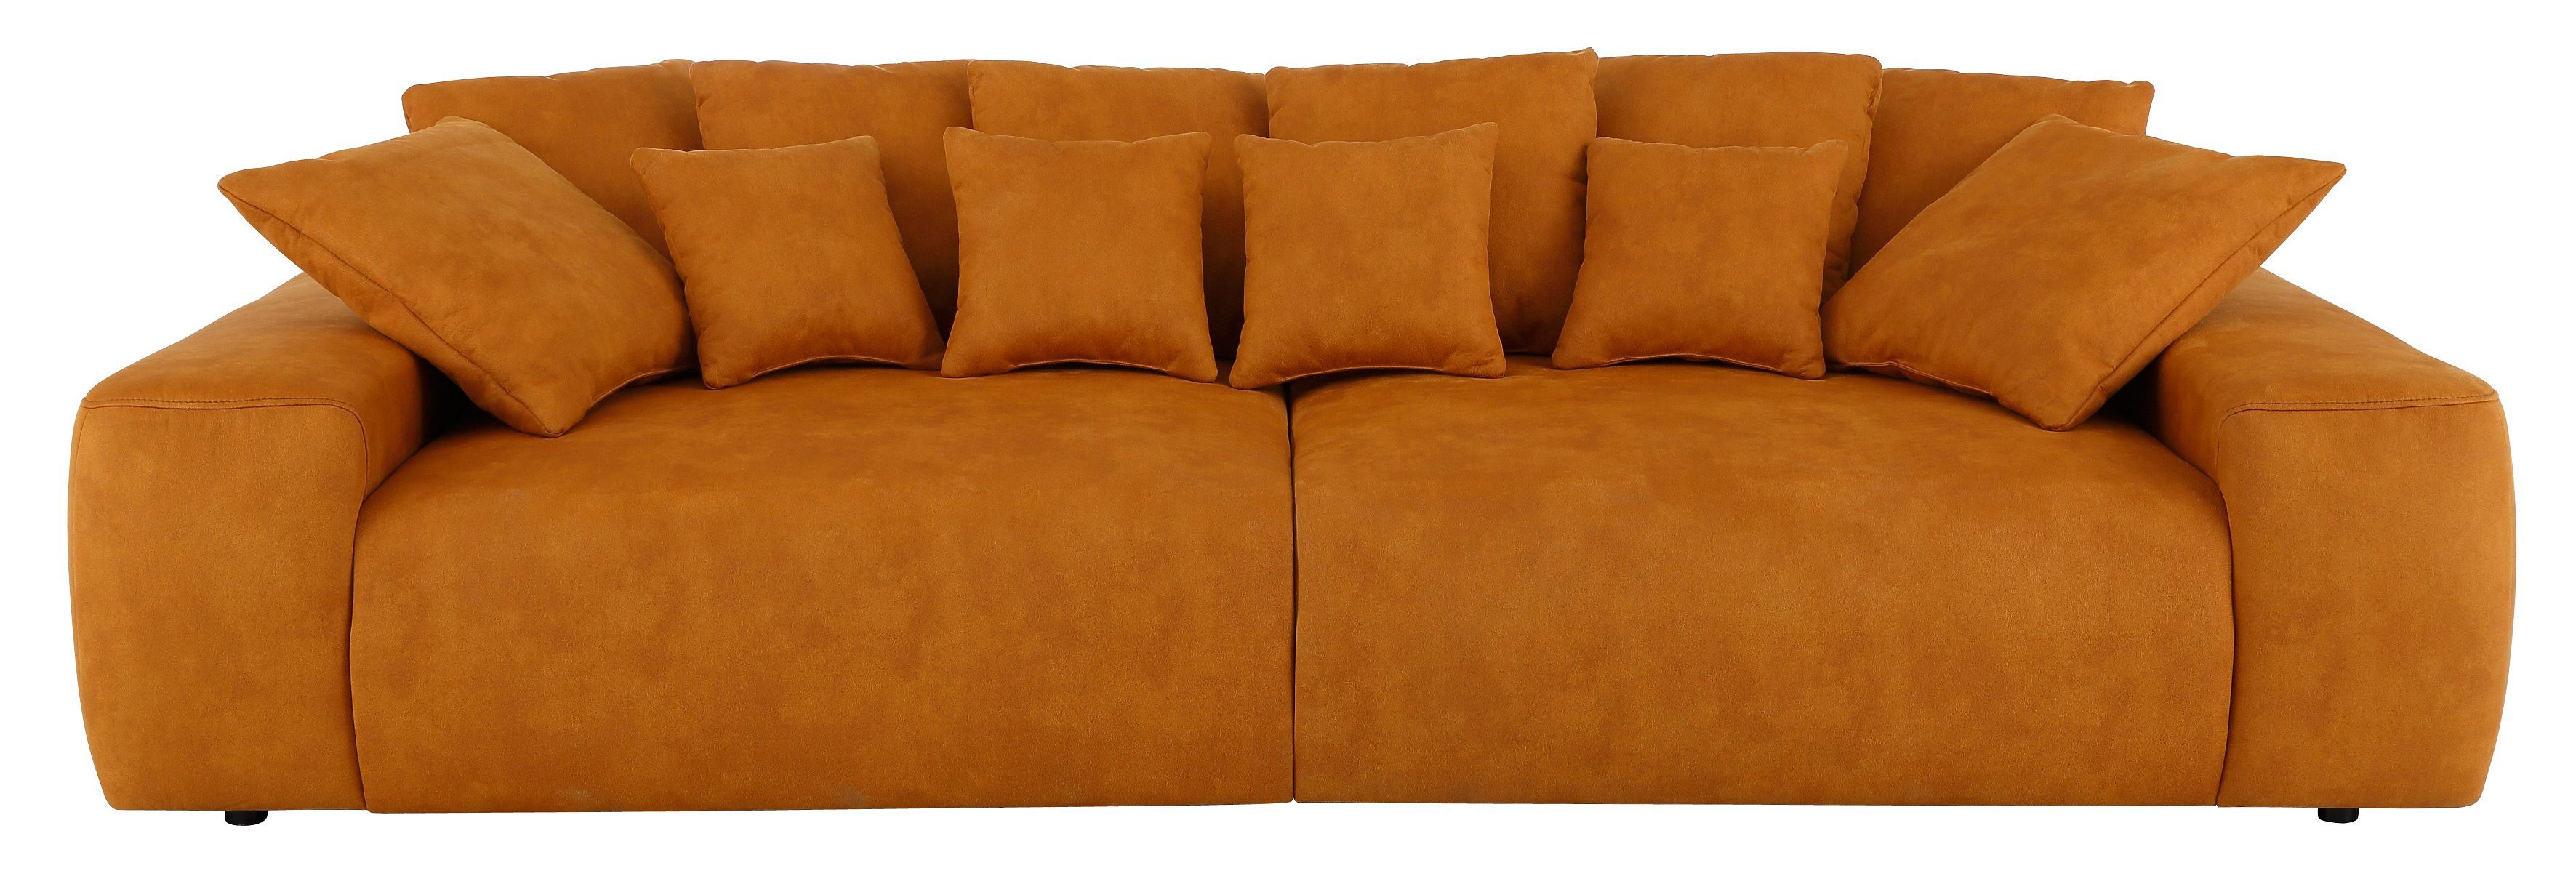 Home affaire Big-Sofa, Breite 302 cm, Lounge Sofa mit vielen losen Kissen-Otto